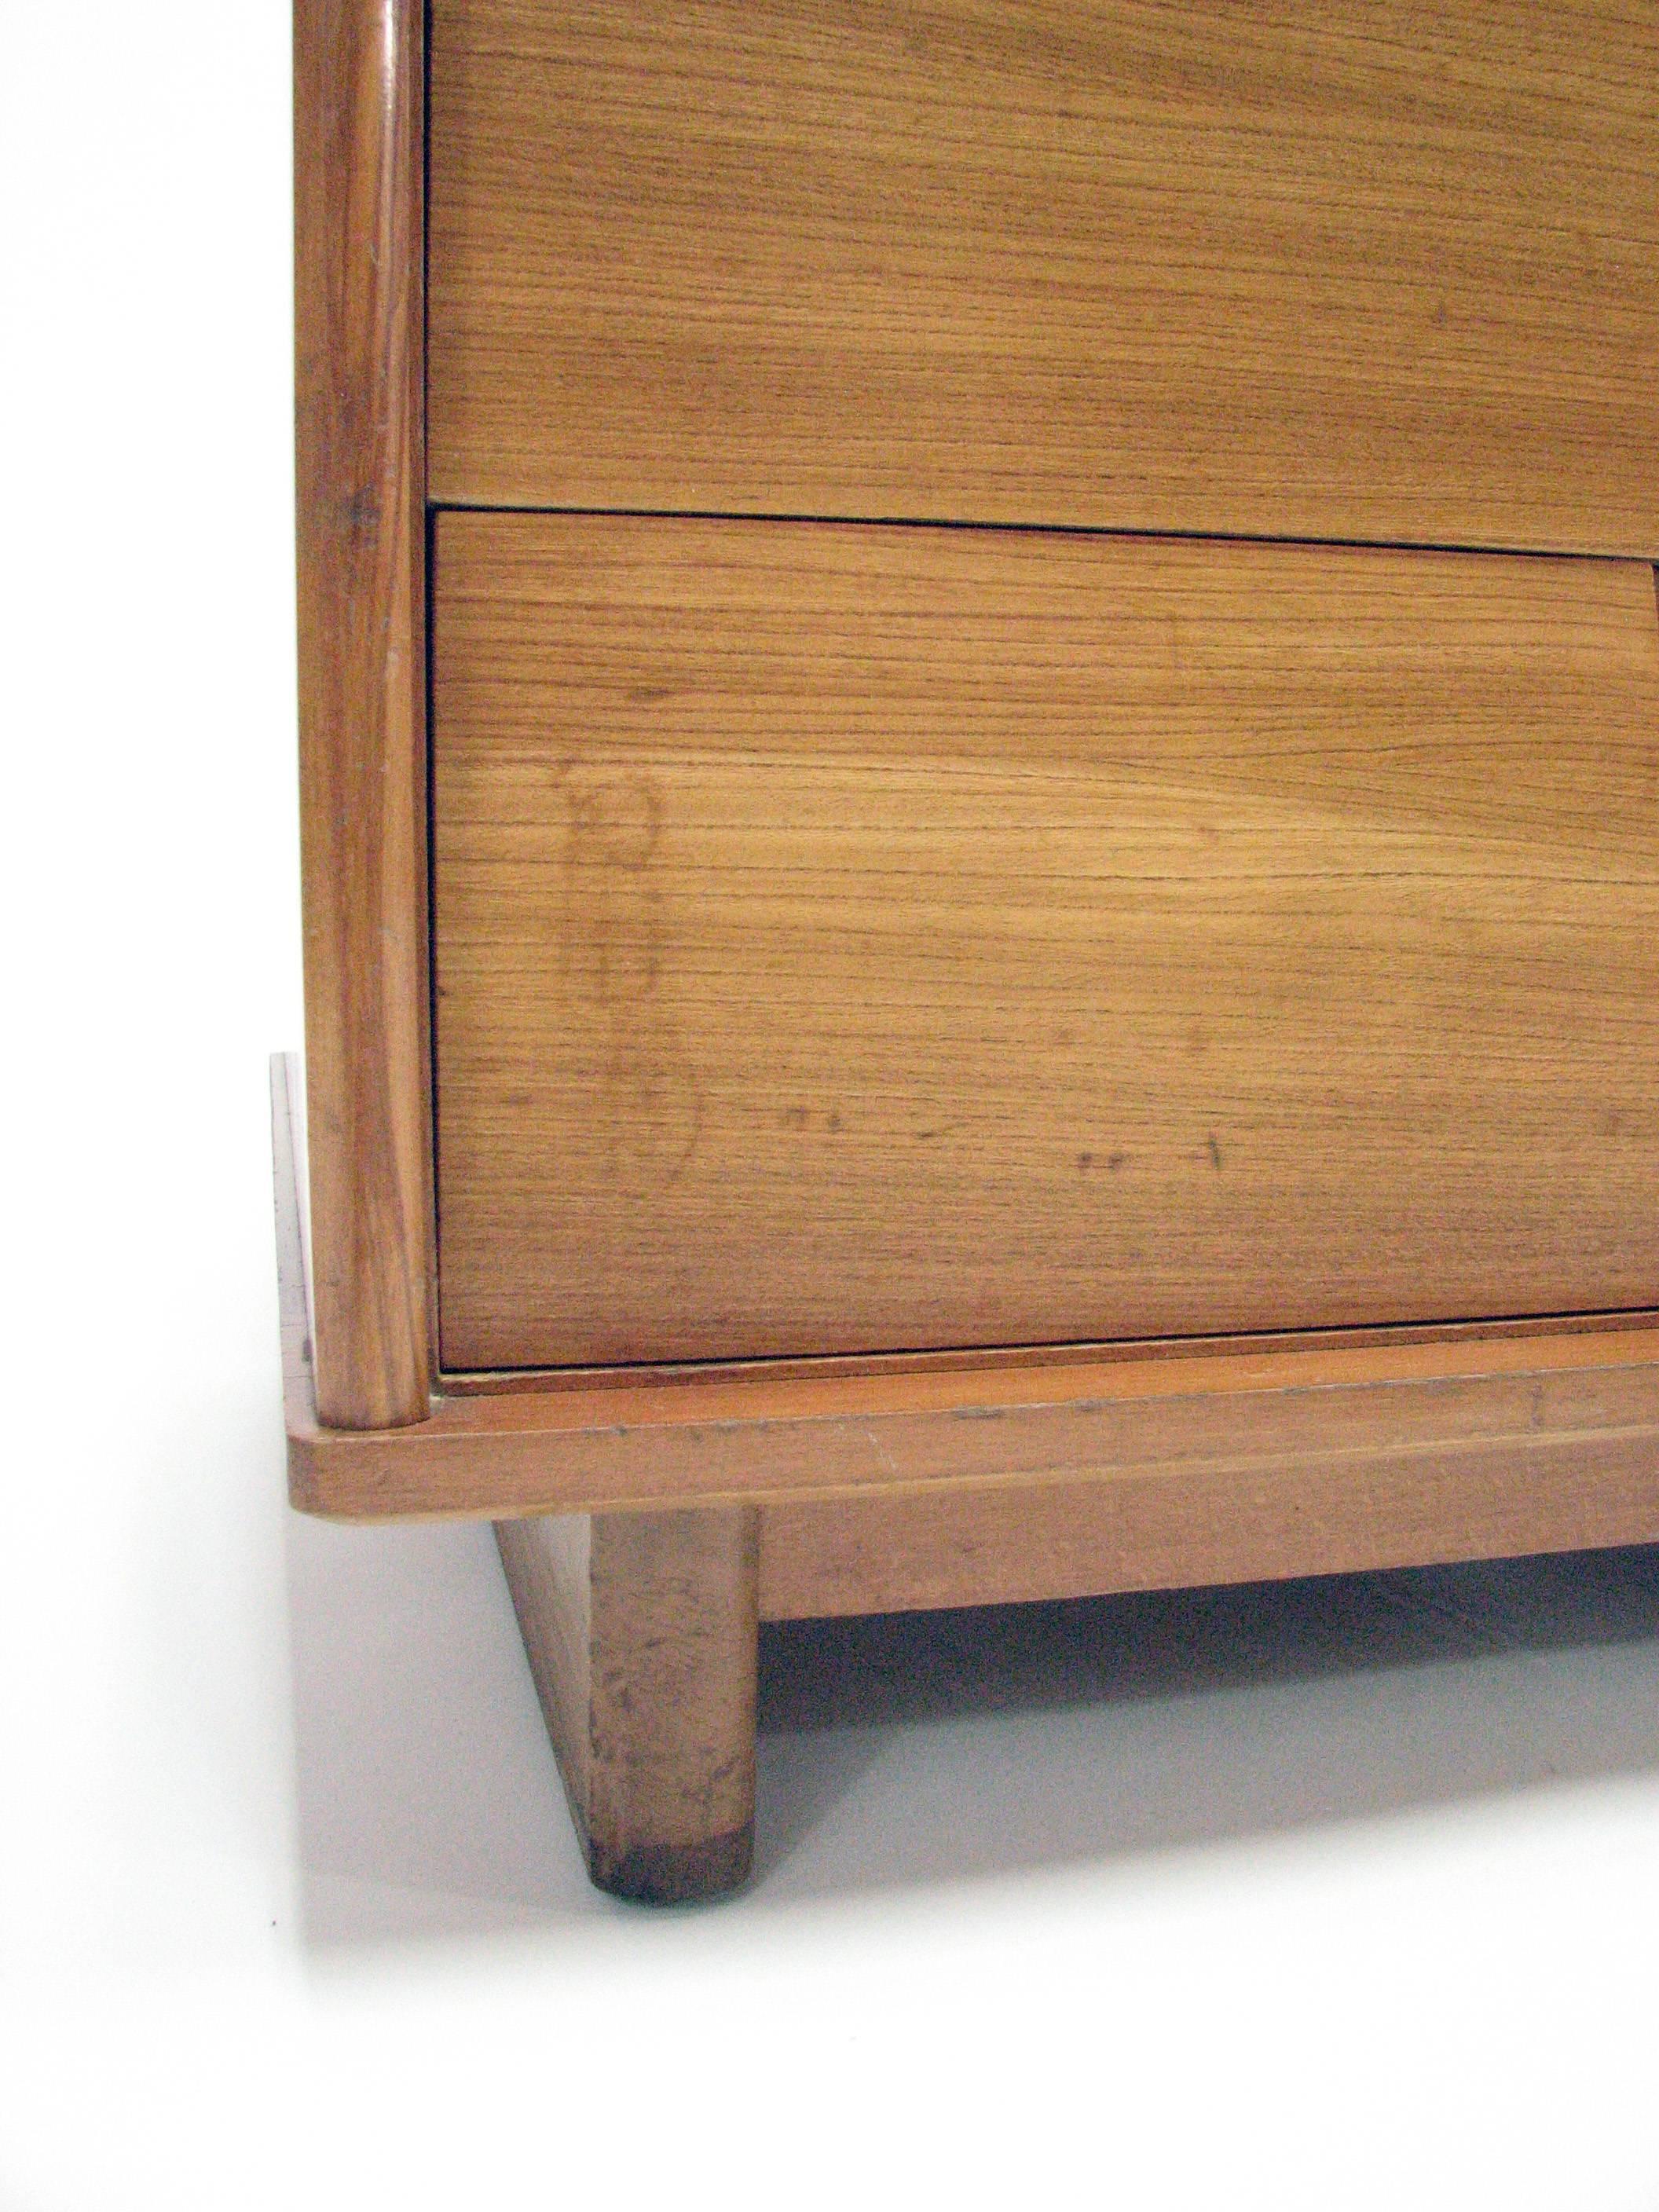 Timeless Mid-Century Modern Dresser by Milo Baughman for Drexel “Today’s Living” 1